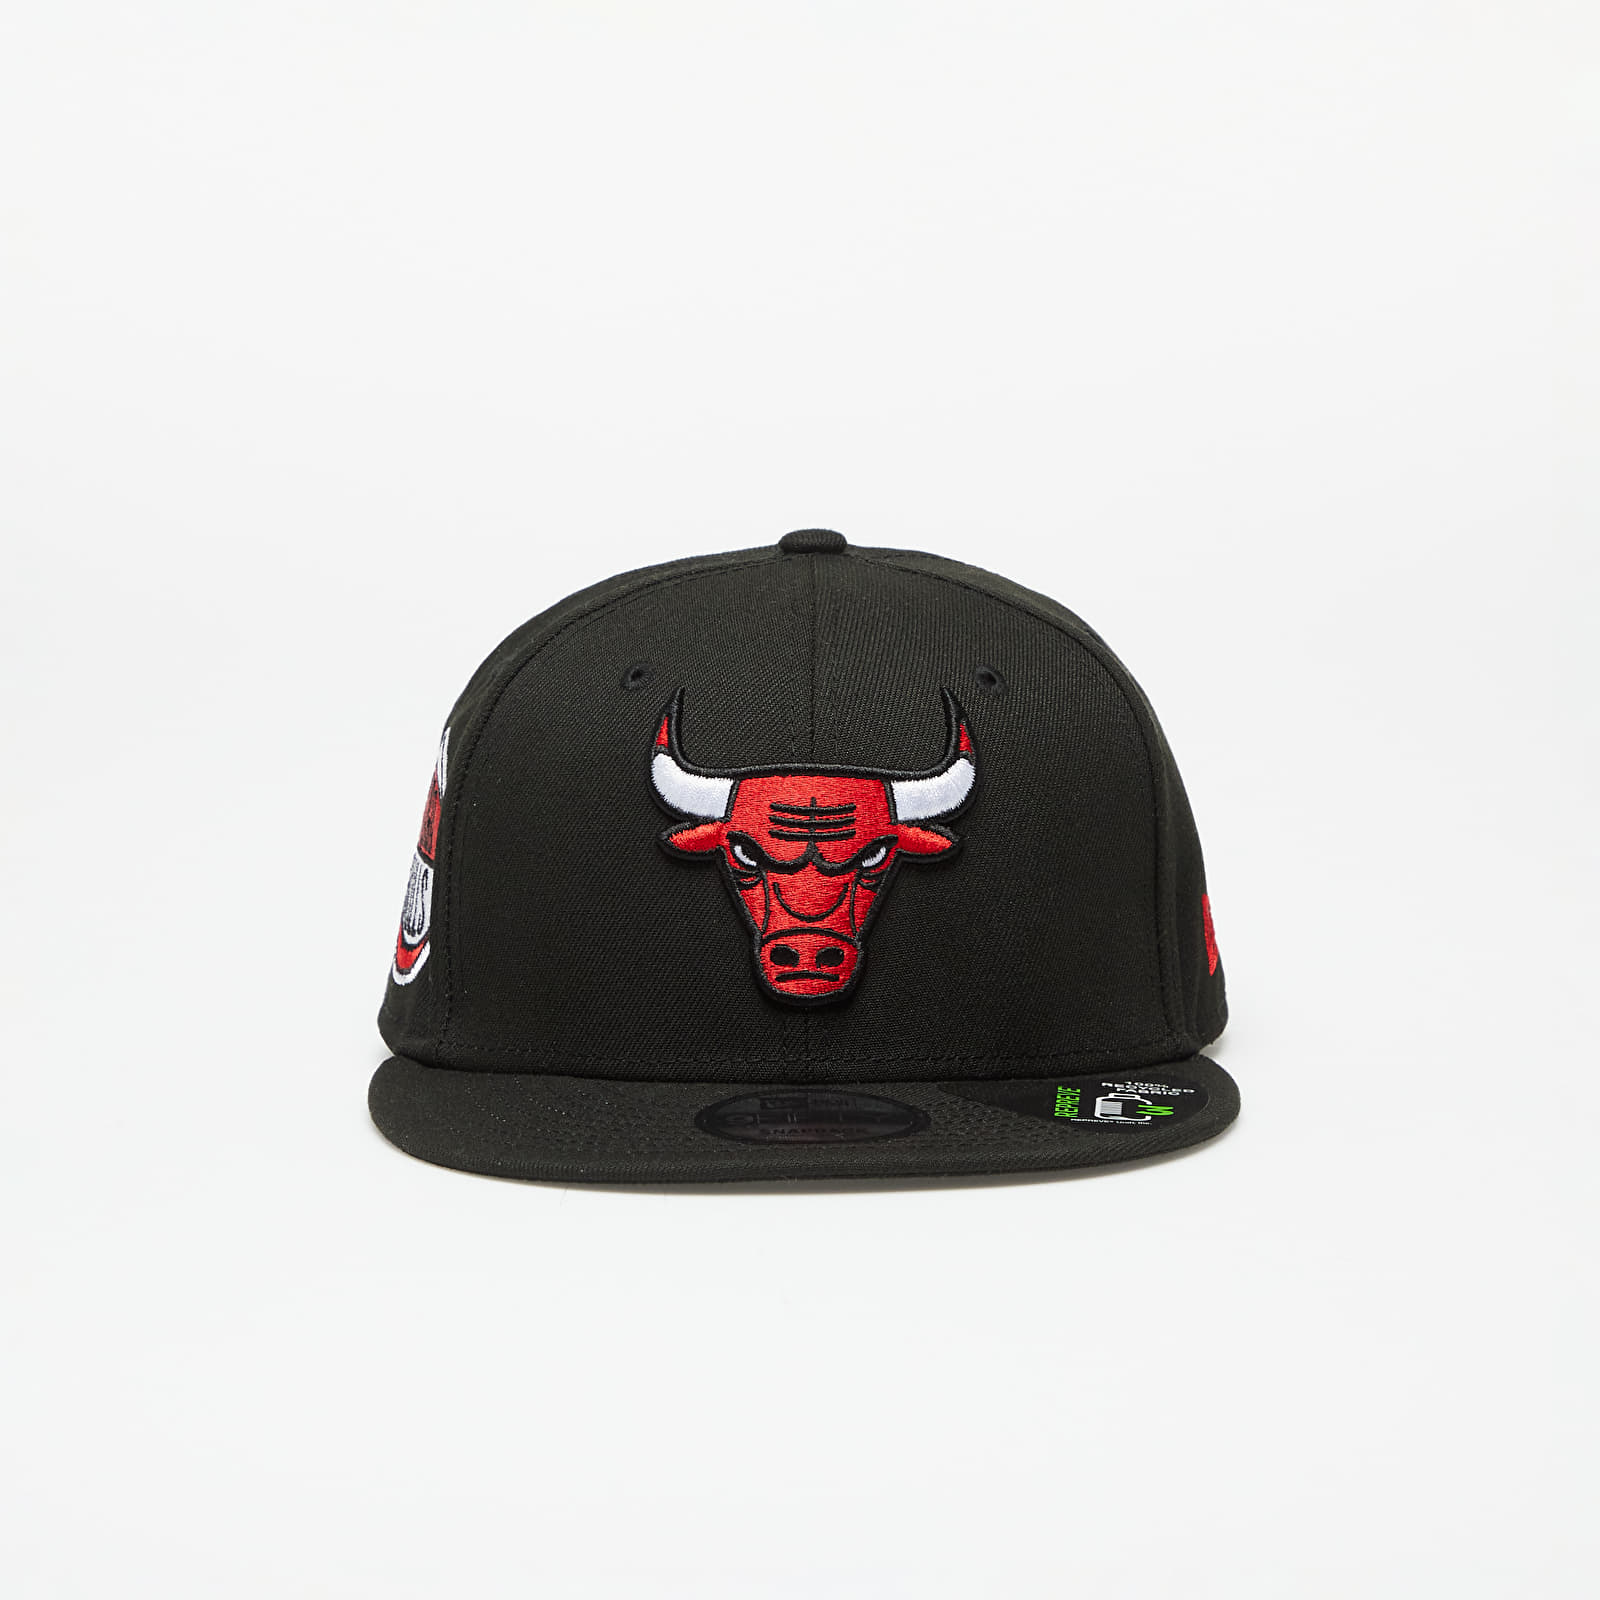 Caps New Era Chicago Bulls Repreve 9FIFTY Snapback Cap Black/ Scarlet